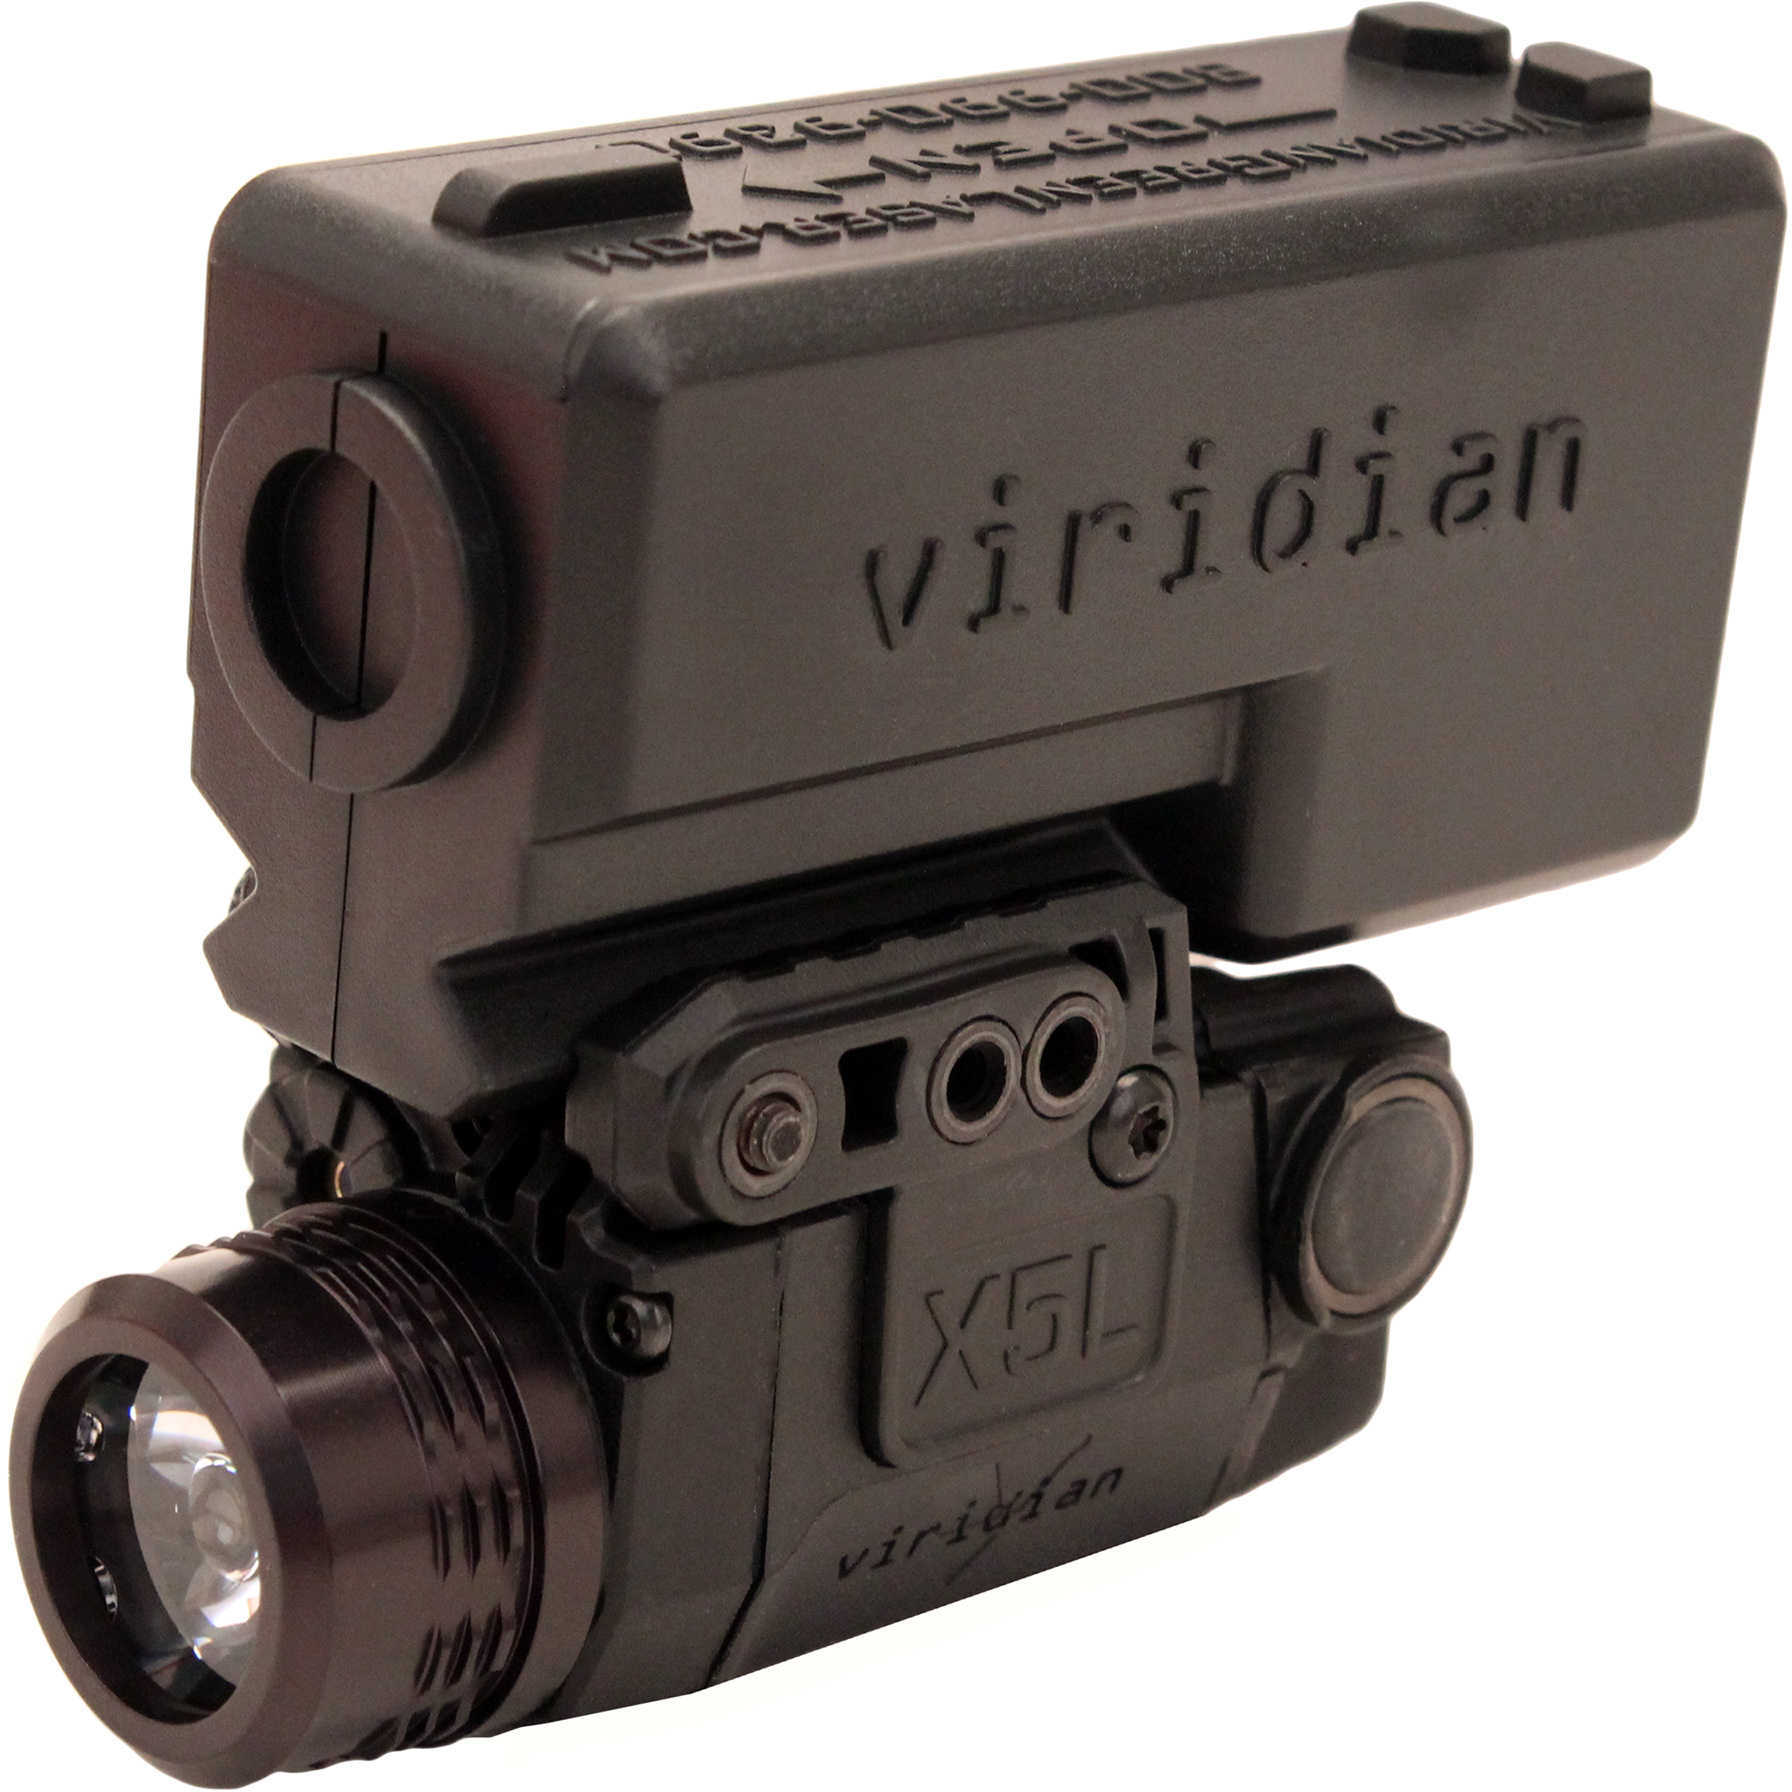 Viridian Weapon Technologies Red Laser Universal Black Fits Any Full Size Pistol/Rifle, ECR enabled, 154 Lumen/187 Strobe, ambid